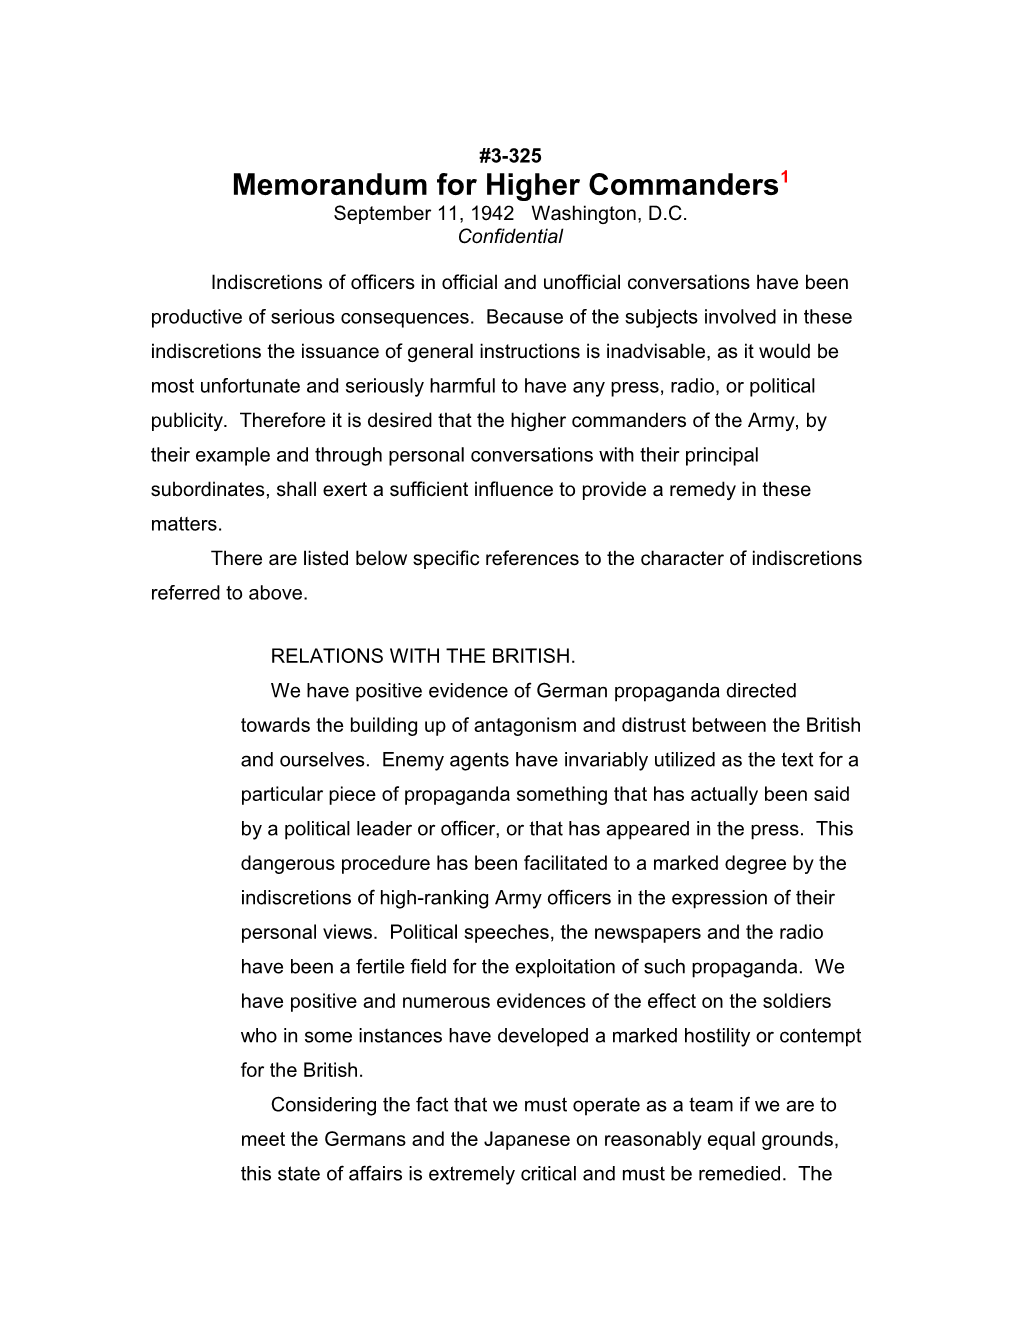 Memorandum for Higher Commanders1